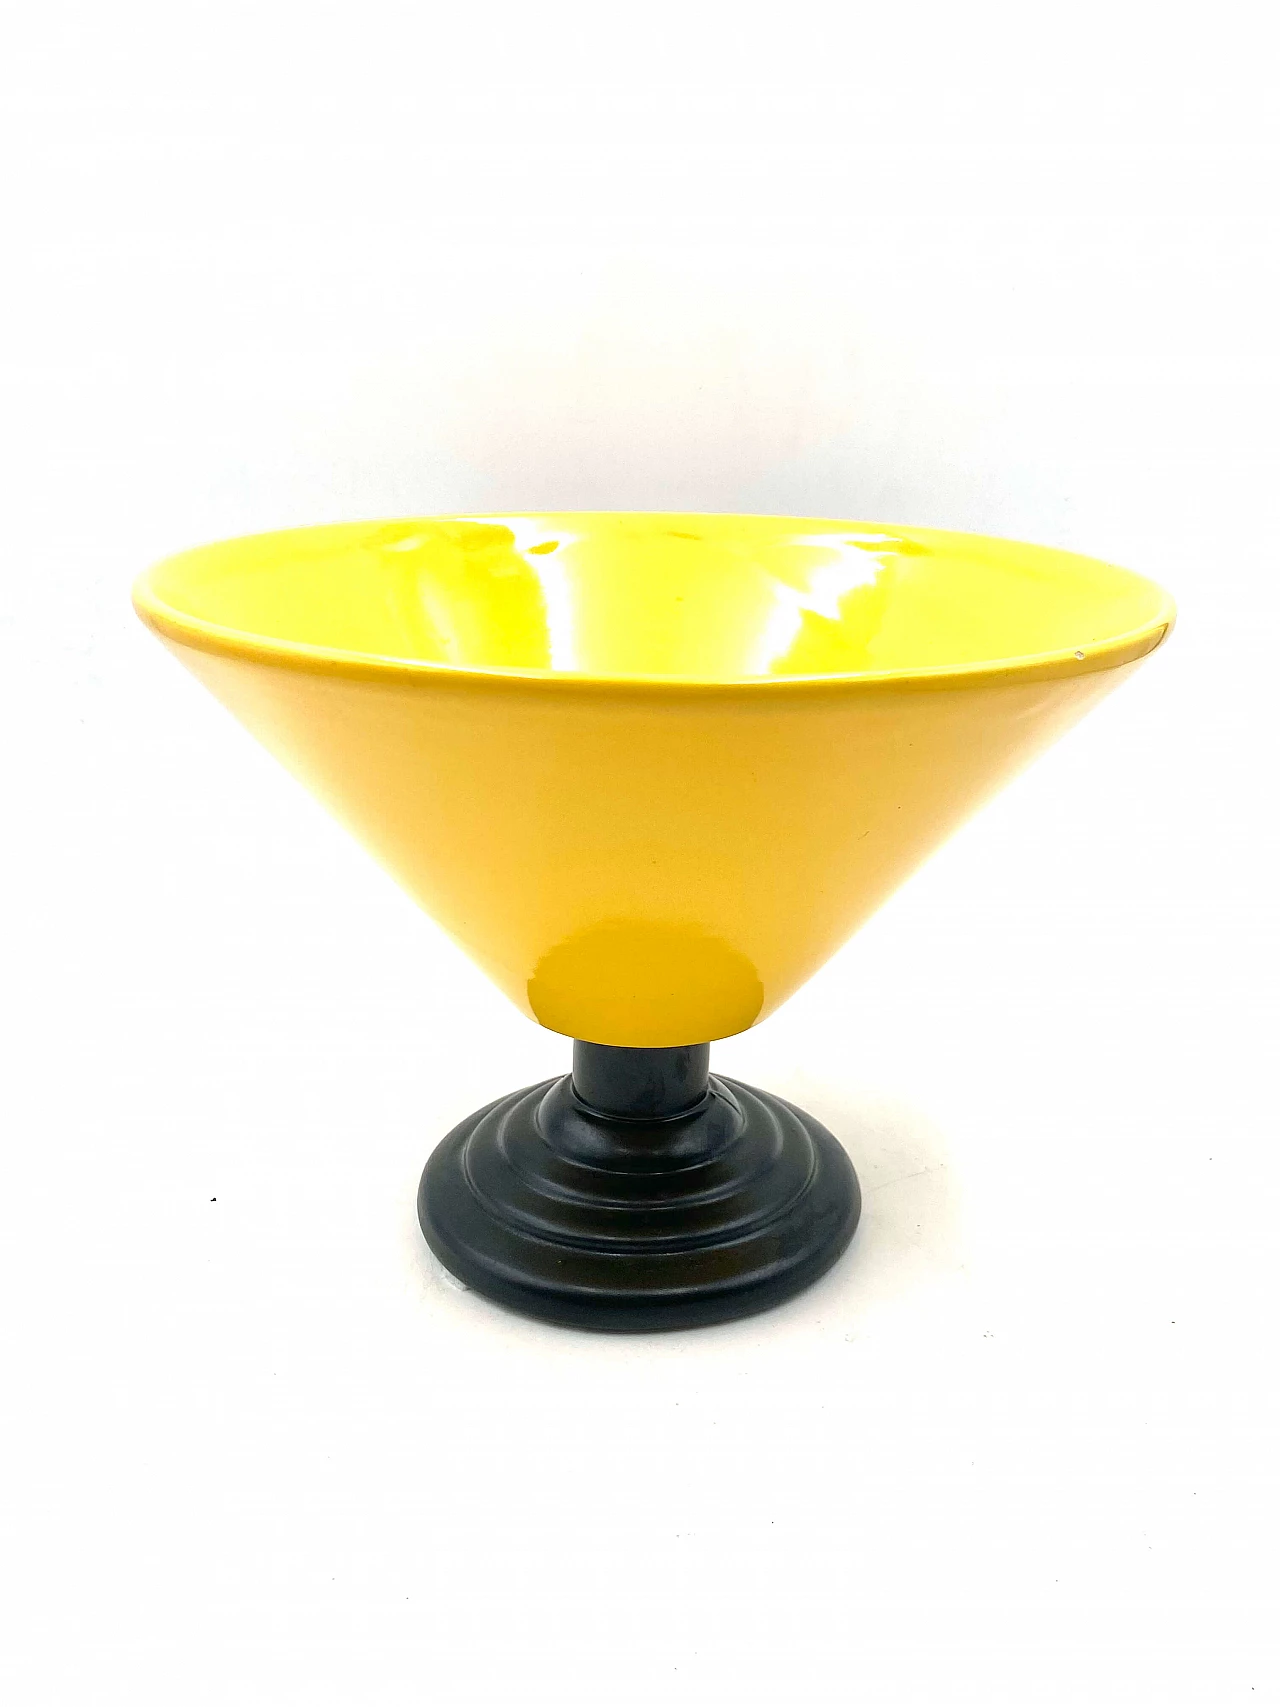 Postmodern yellow vase in Memphis style, 1980s 1380457